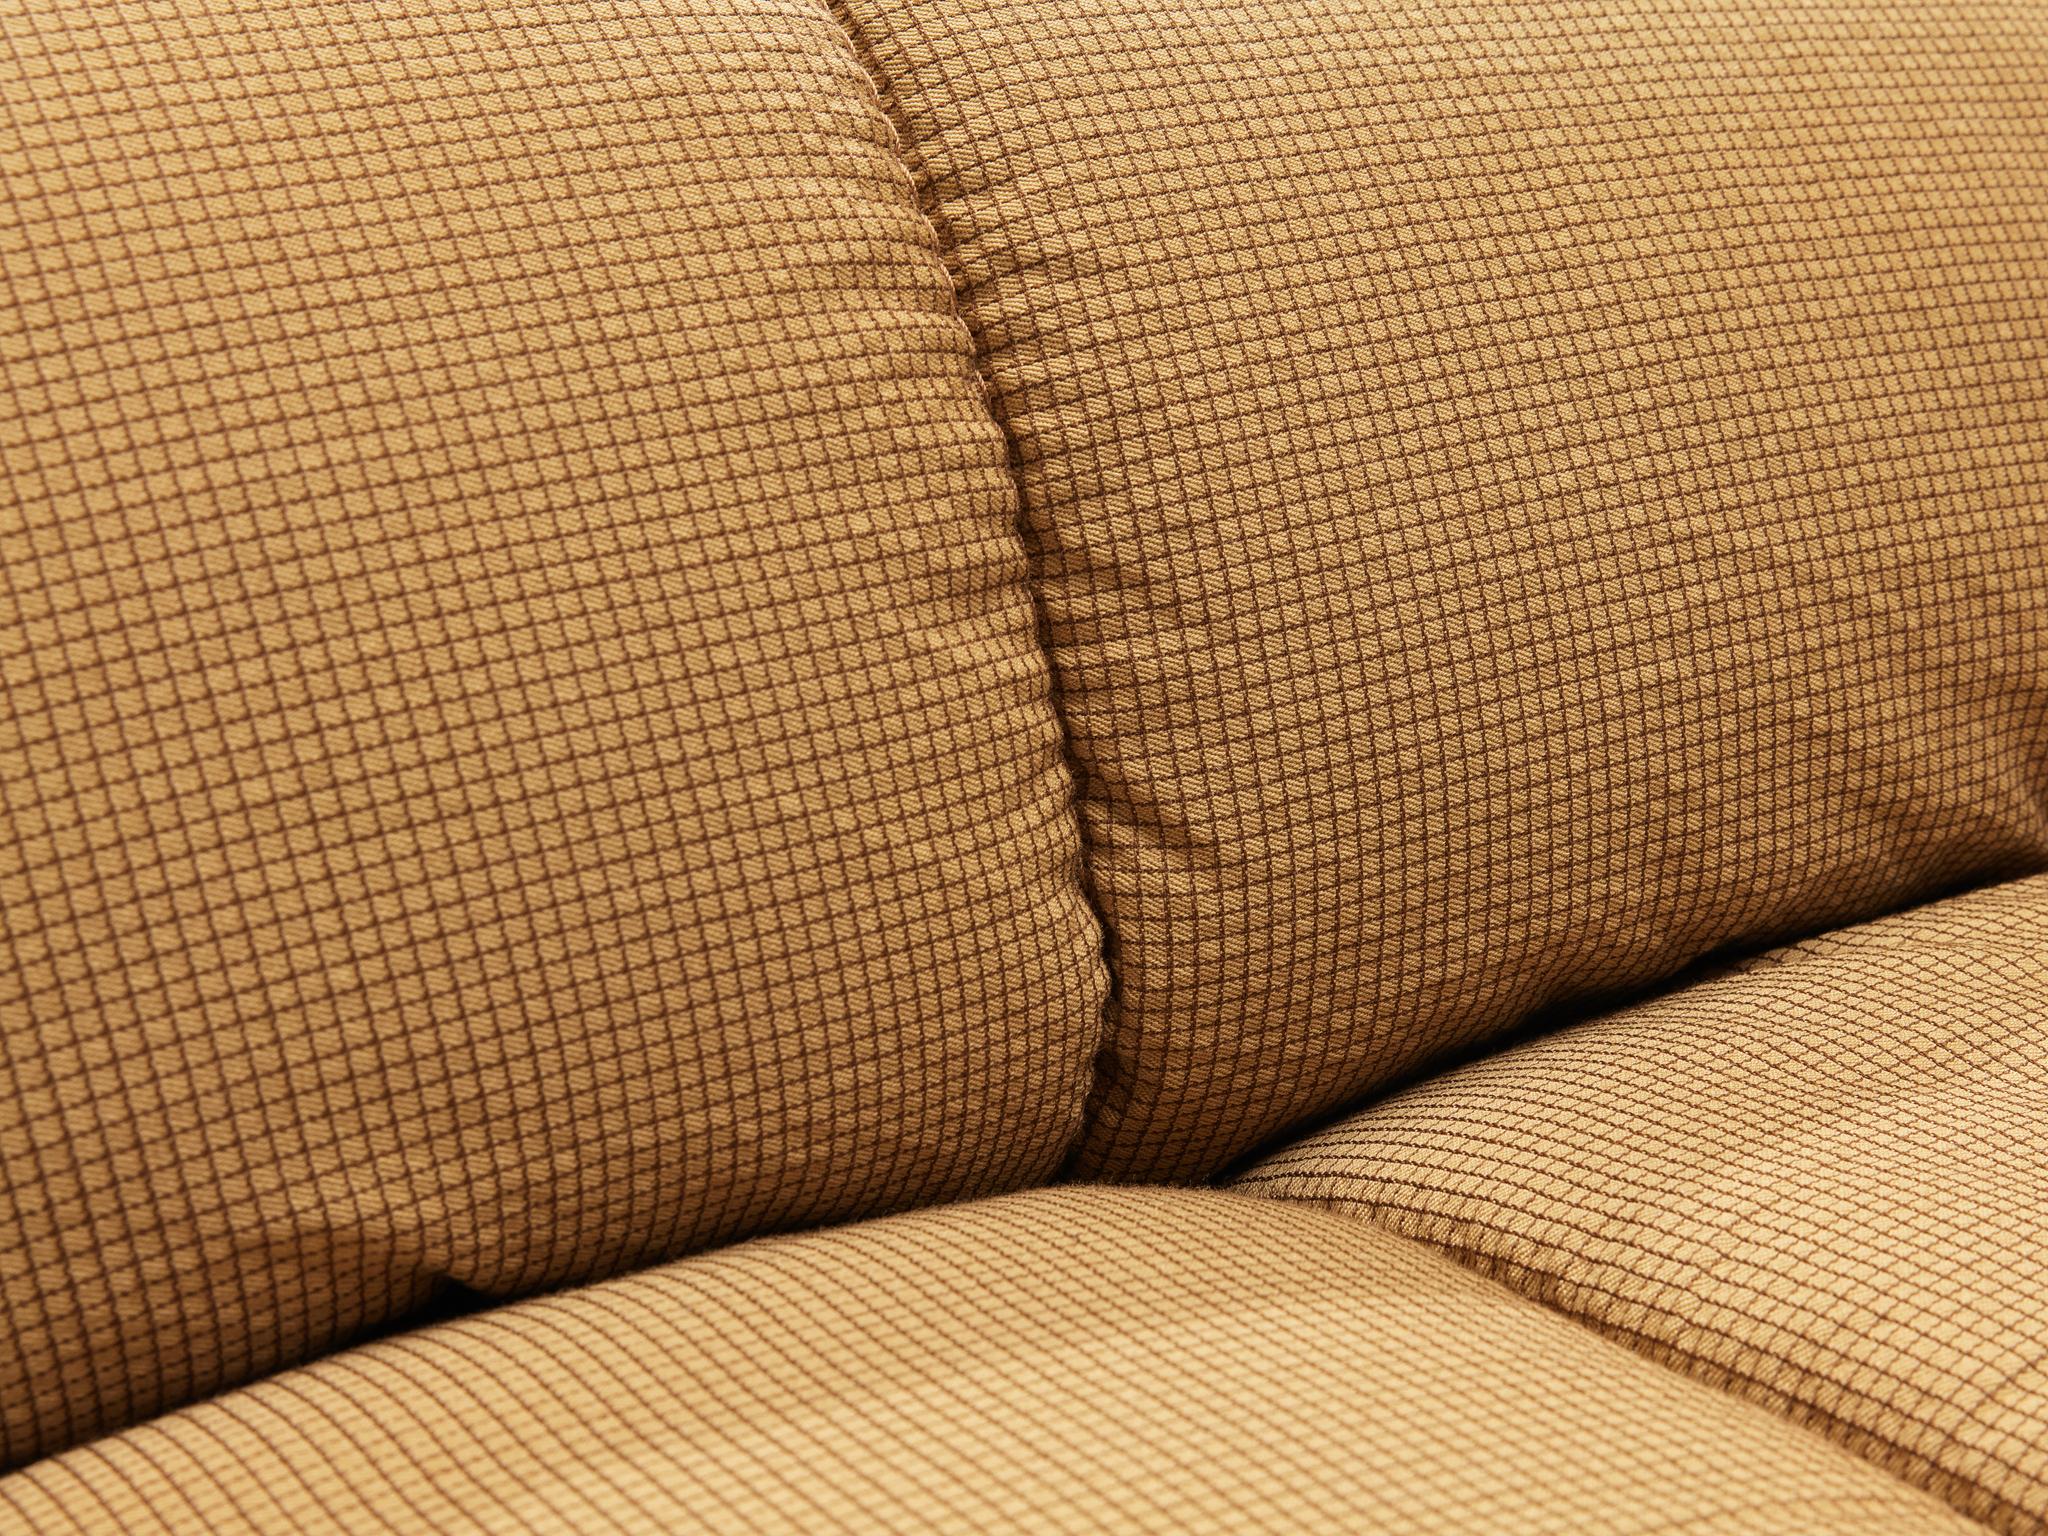 Fabric Cini Boeri for Arflex Modular 'Strips' Three Elements Sofa with Ottoman